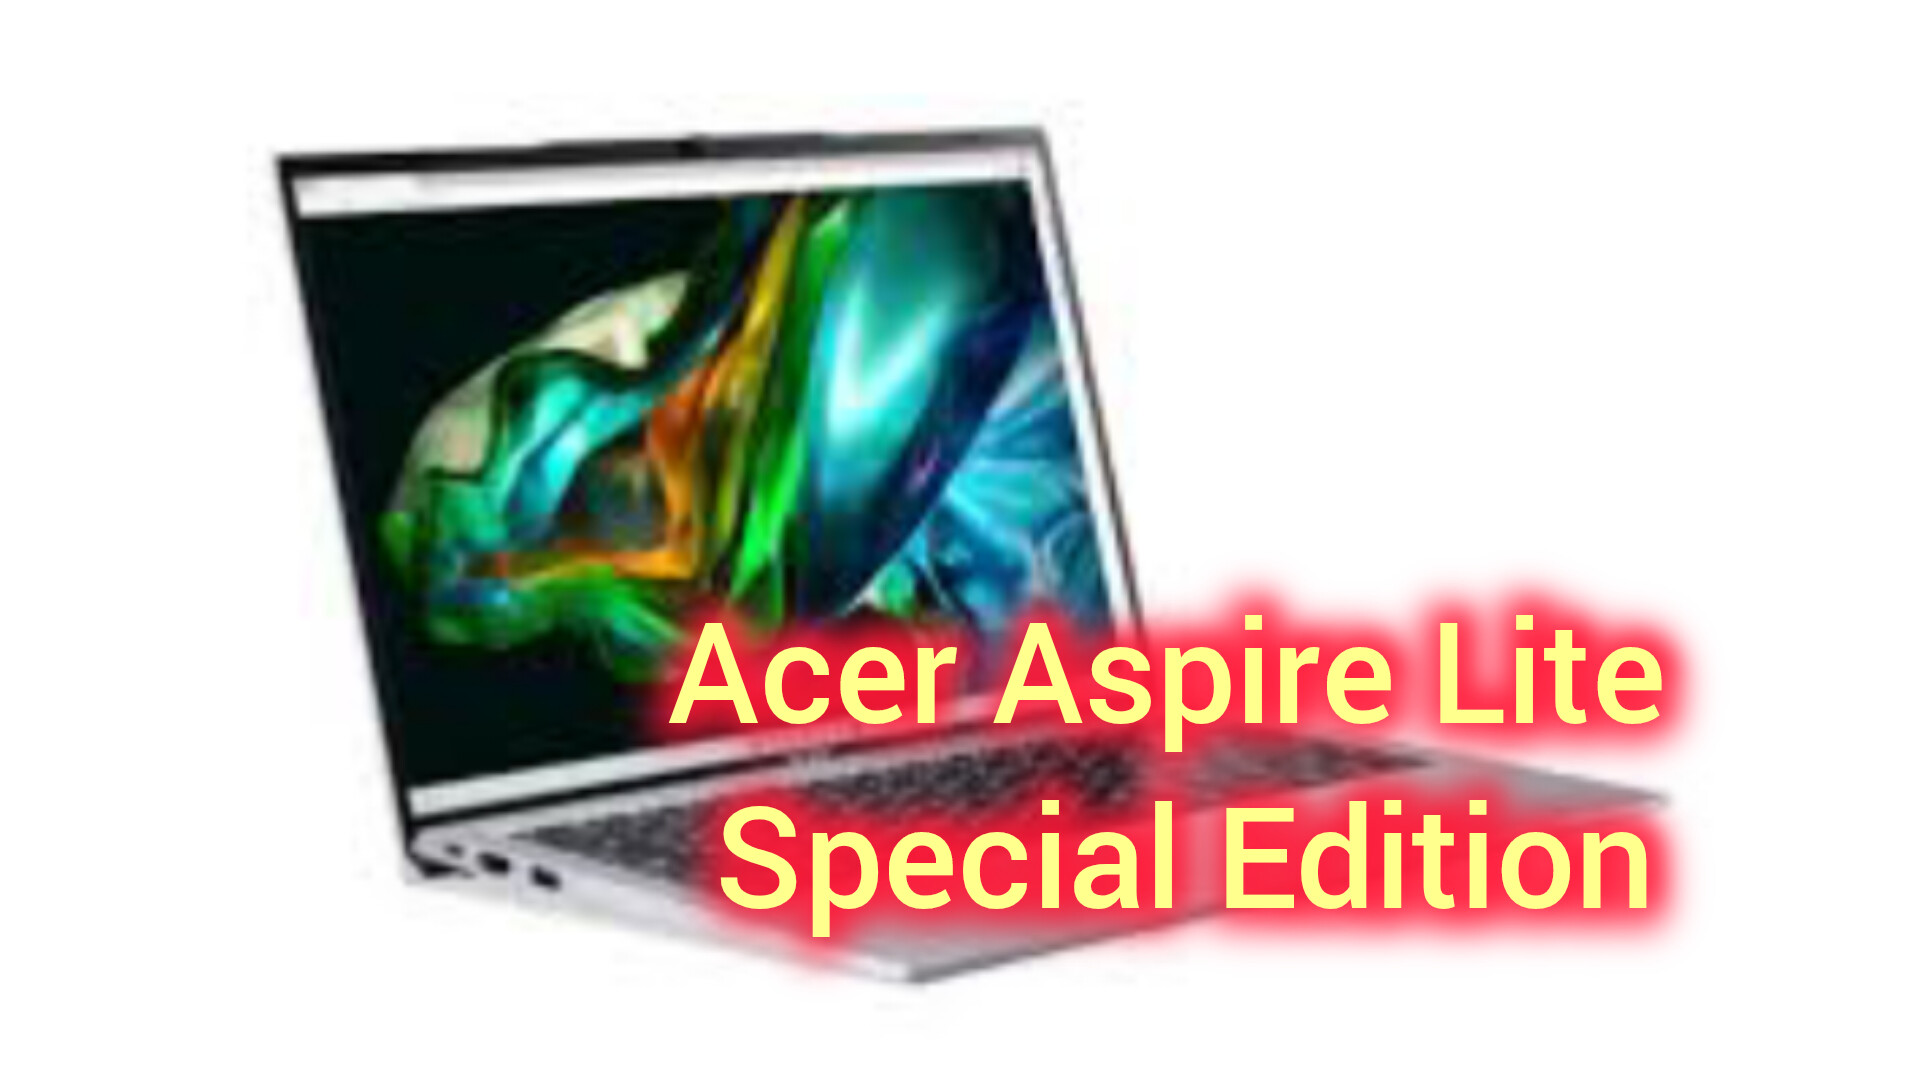 Acer Aspire Lite Special Edition: Prosesor Hybrid 6 Core dan Layar IPS WUXGA, Harga Cuma Rp. 6 Jutaan